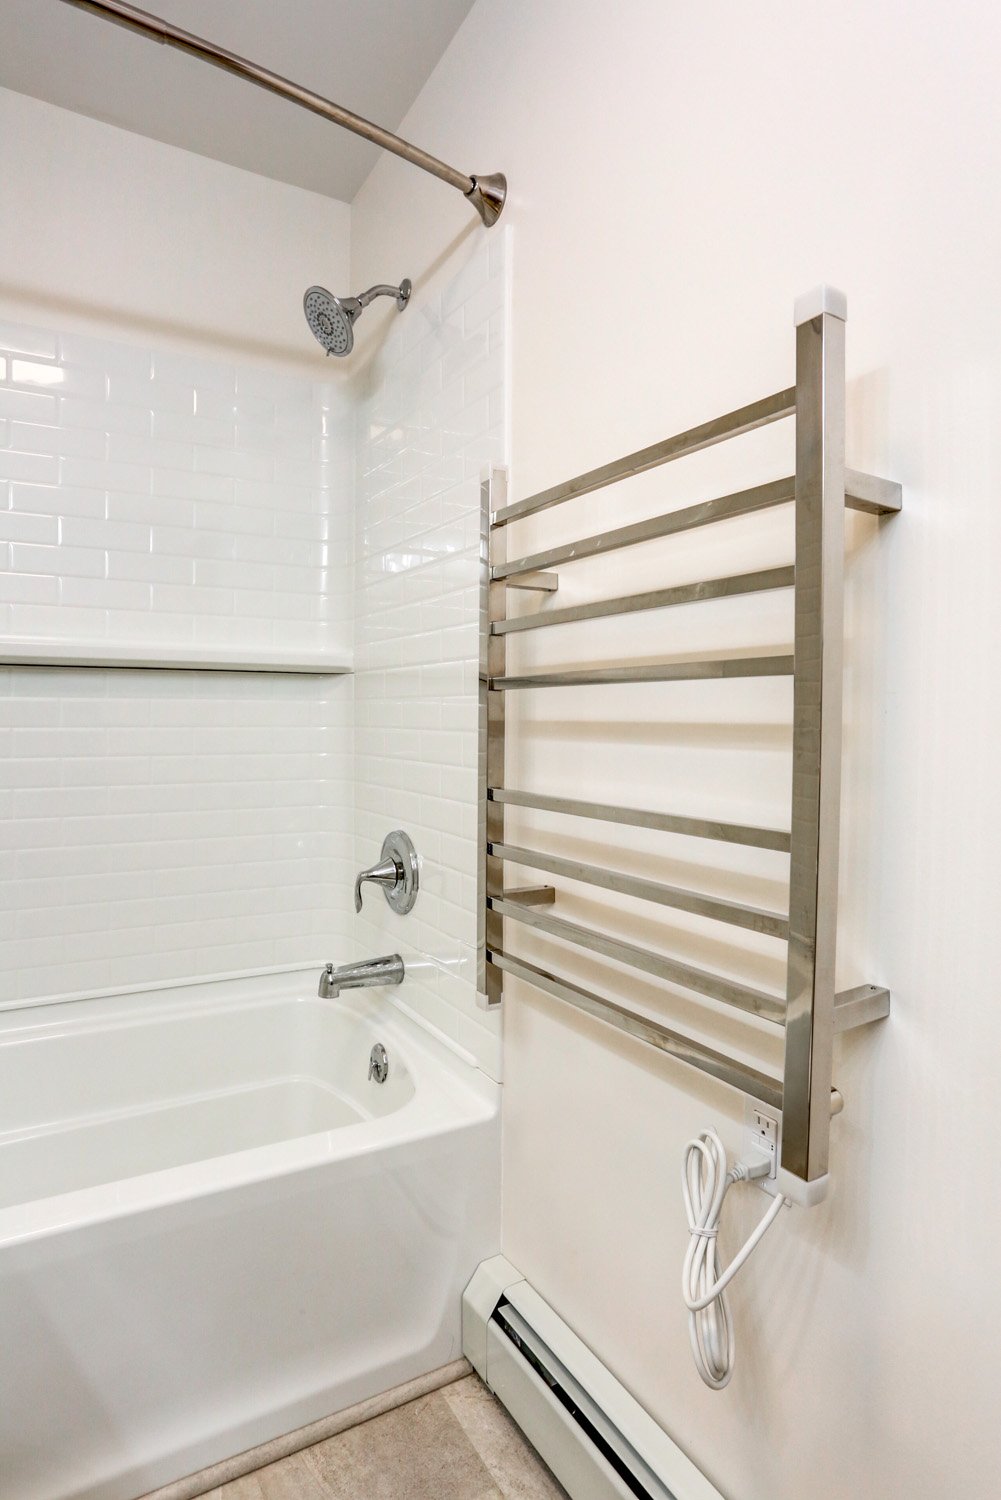 Bloomingdale guest bathroom remodel with towel warmer accessory